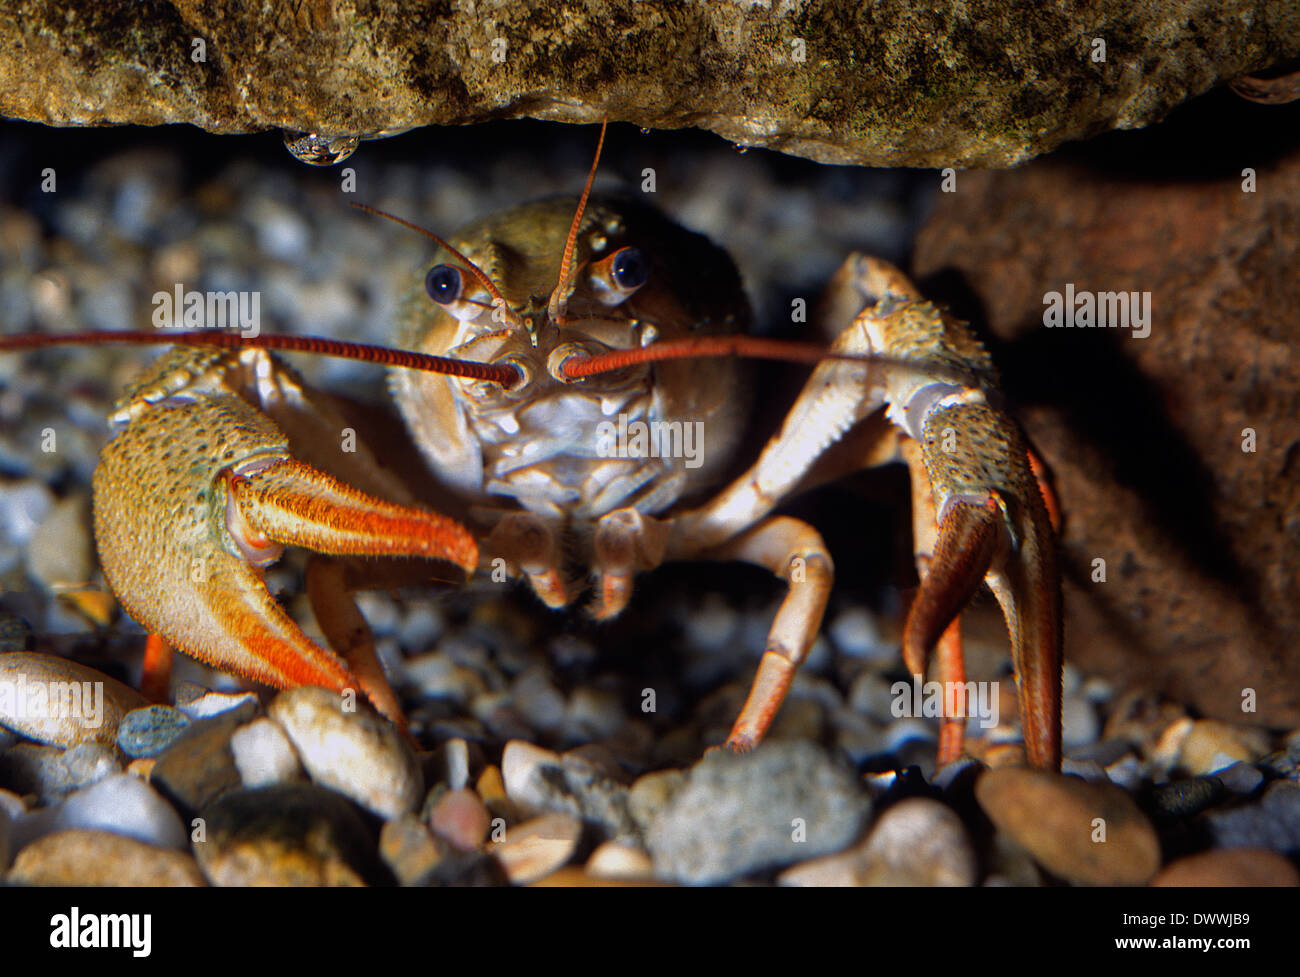 Danube crayfish Astacus leptodactylus, Astacidae, Europe, Crustacea Decapoda Stock Photo